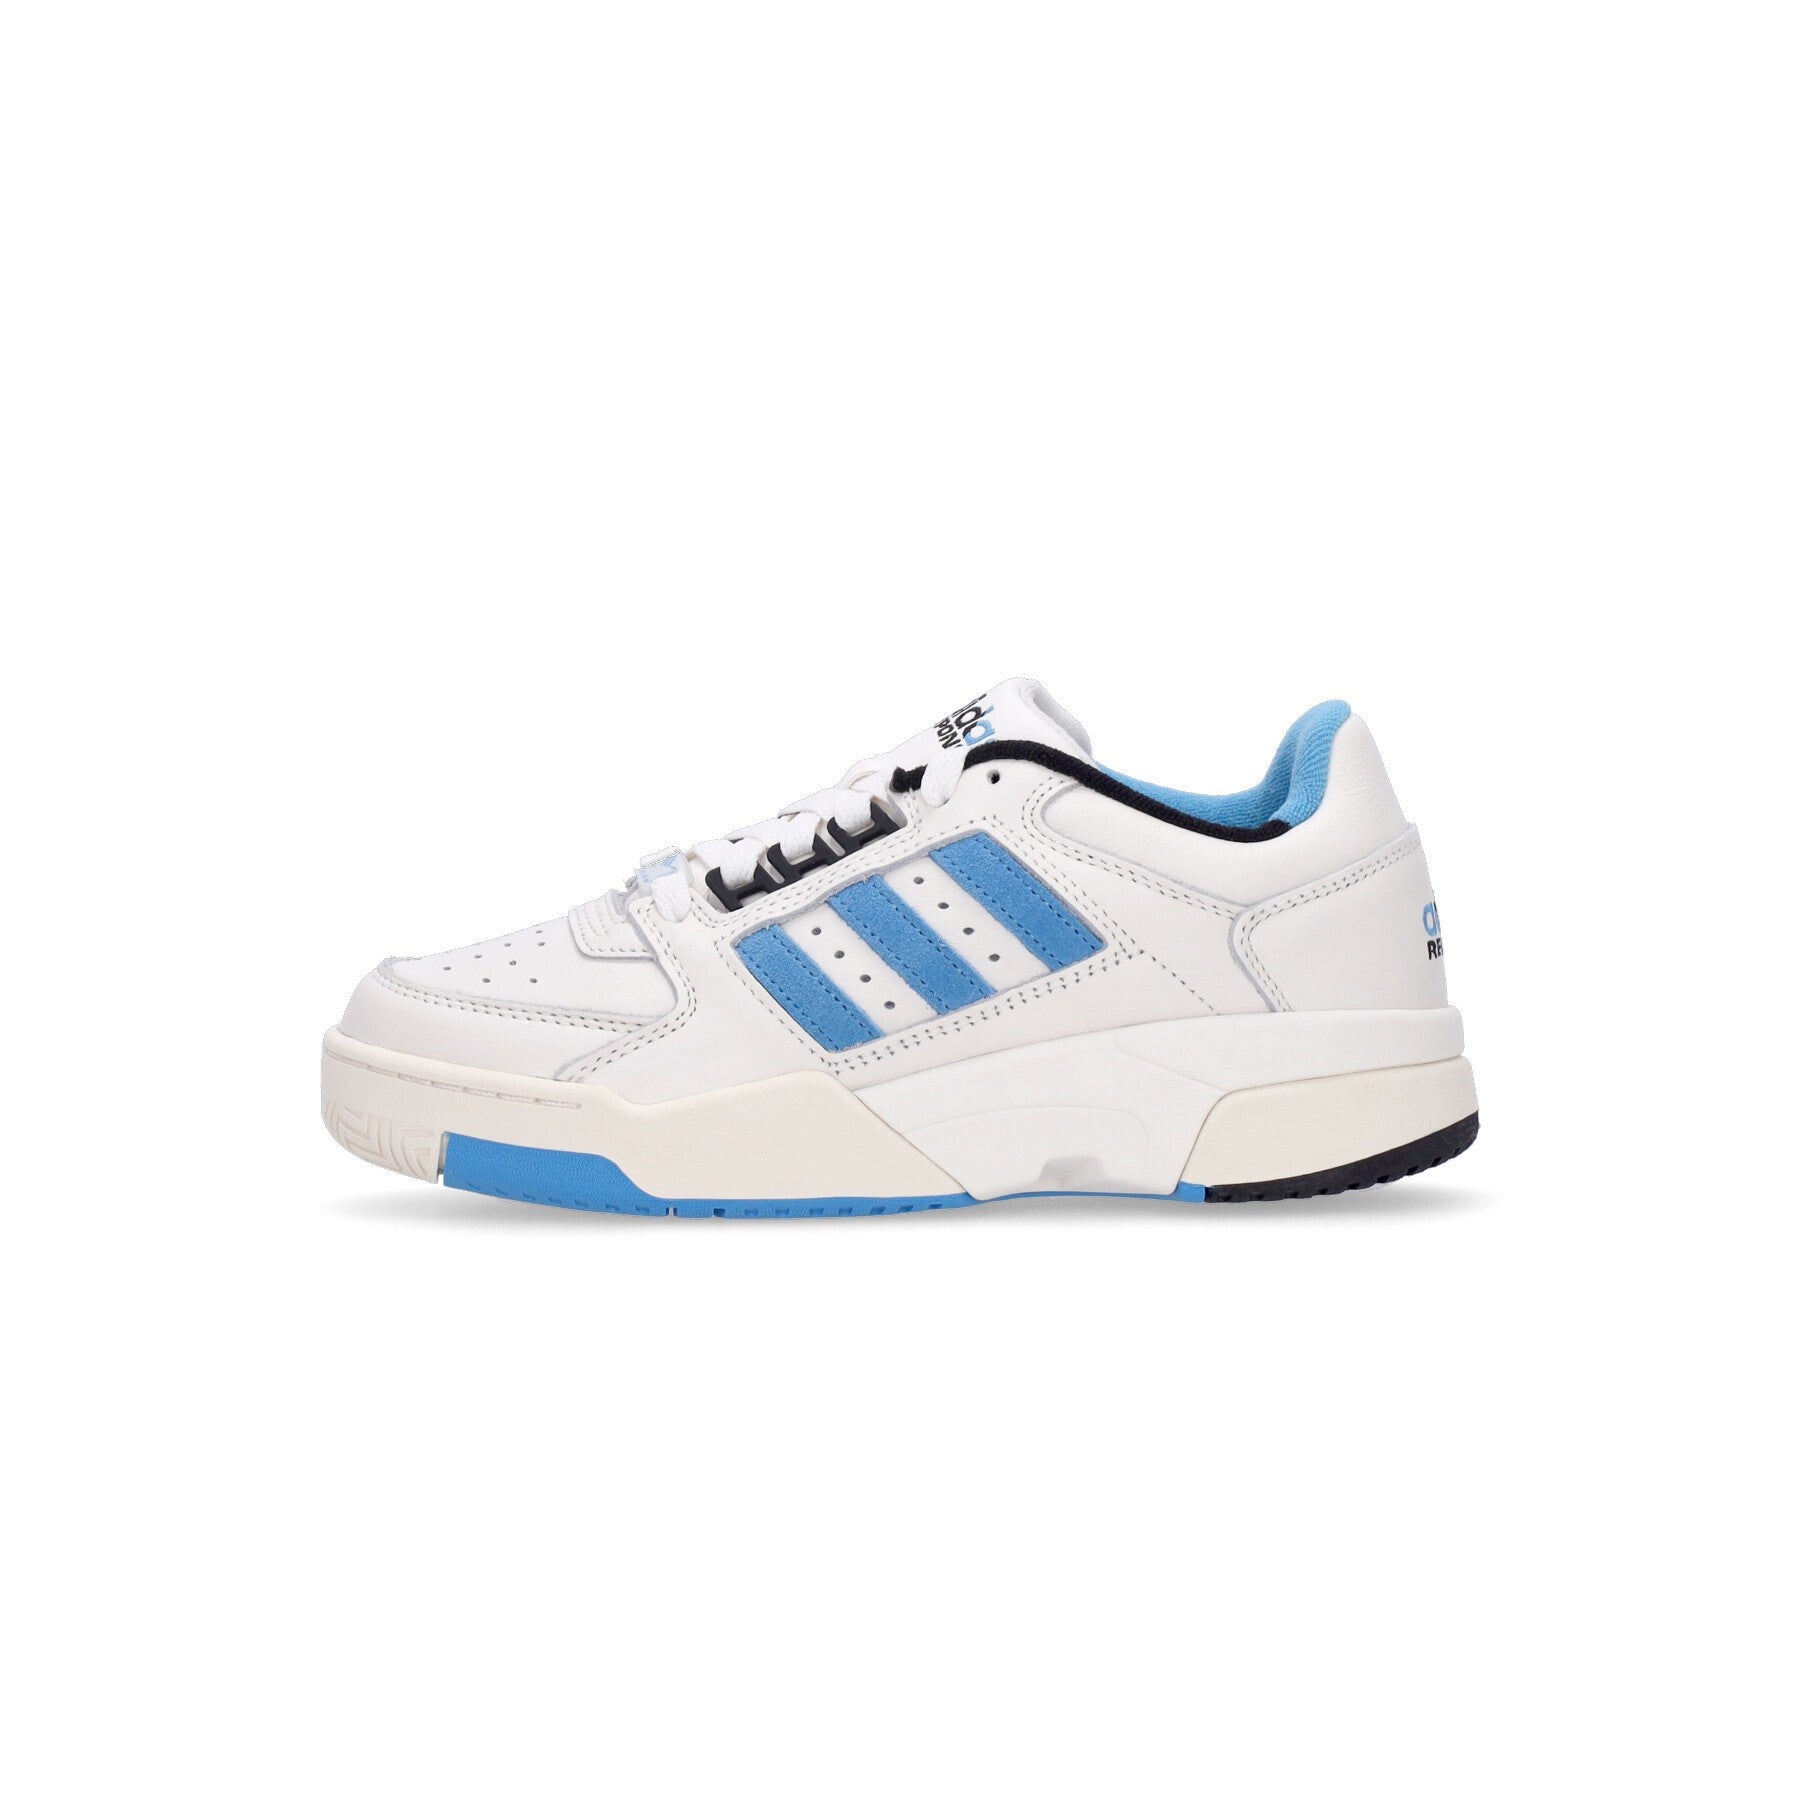 Adidas, Scarpa Bassa Donna Torsion Response Tennis Low W, Cloud White/pulse Blue/cloud White